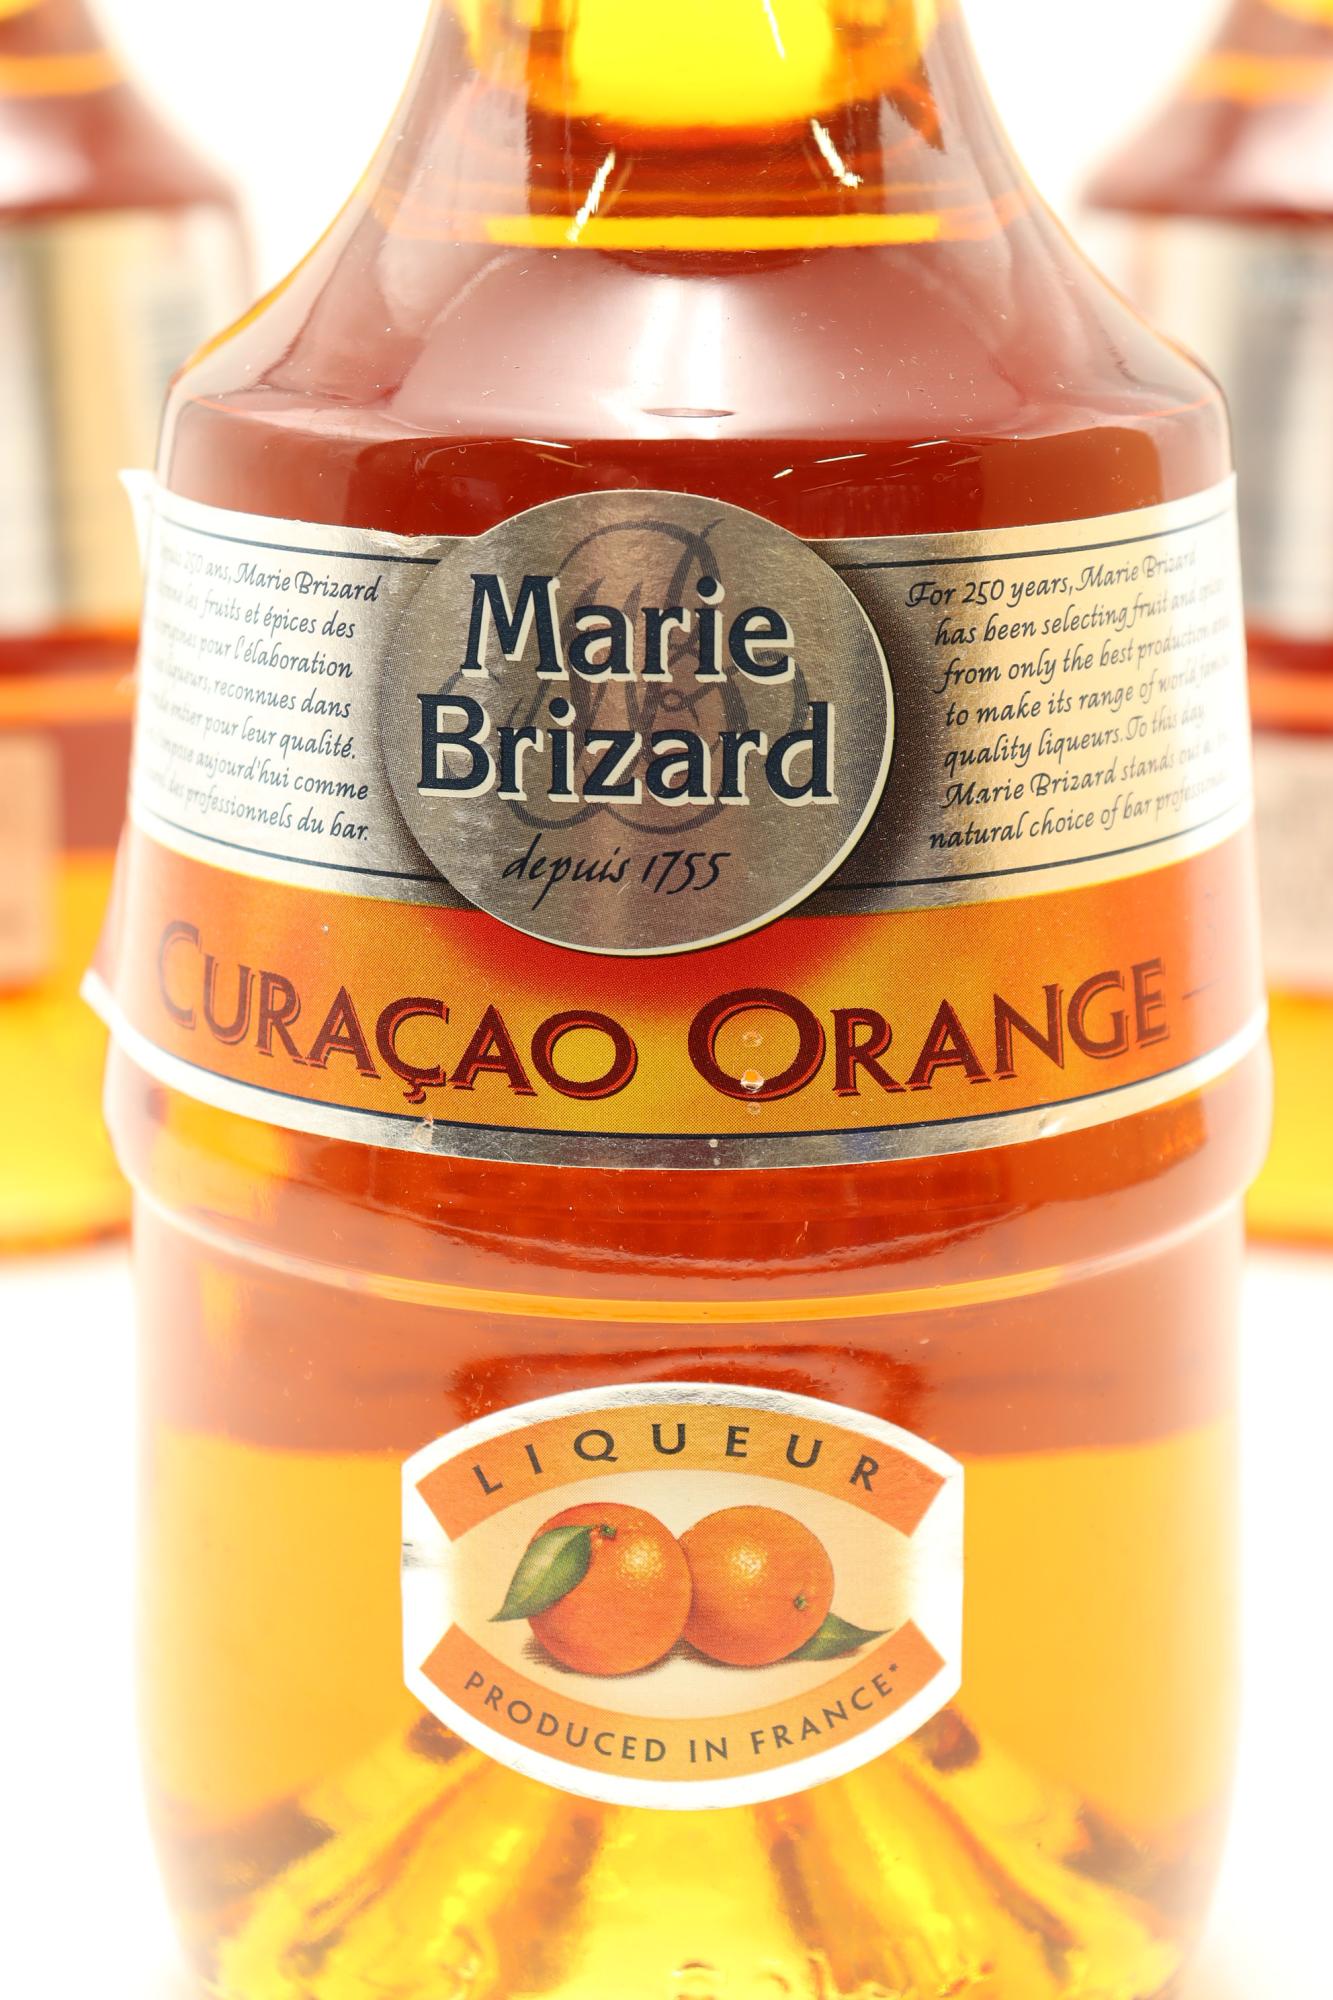 Marie Brizard Orange Curacao Liqueur